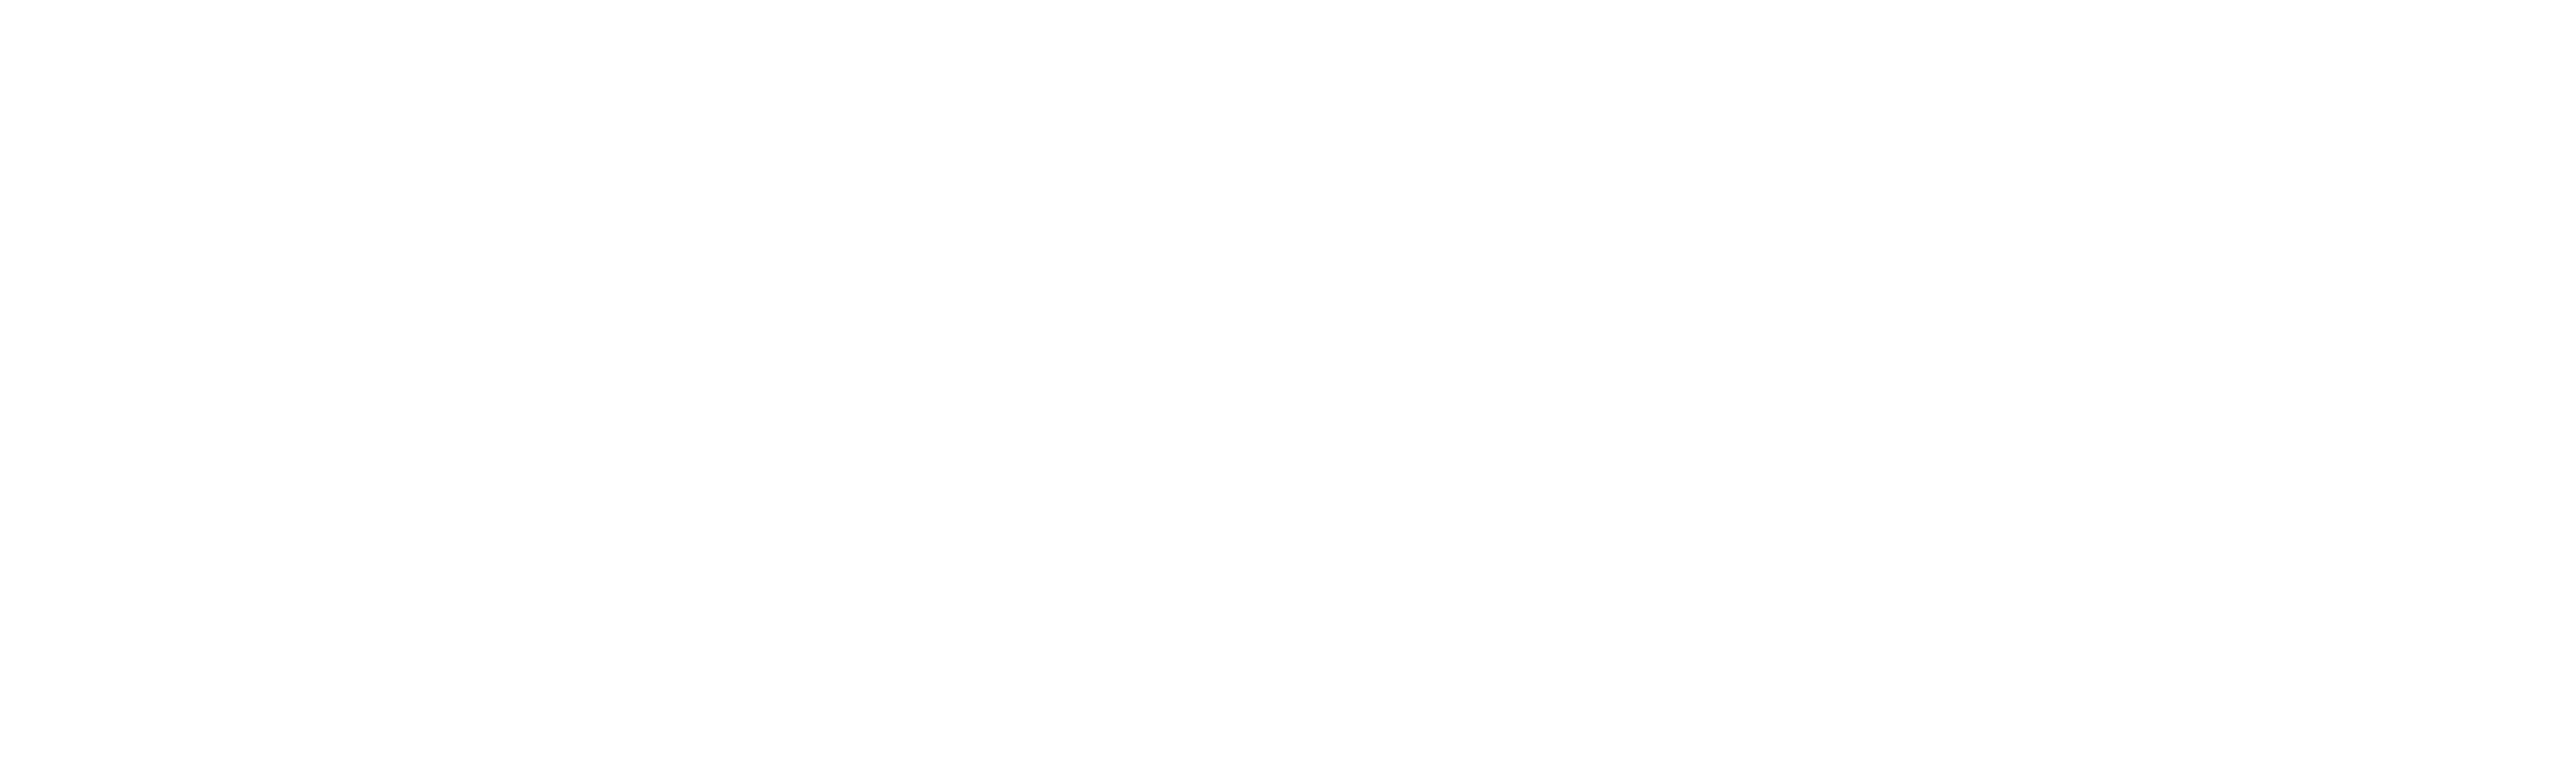 Tinderbox Business Development logo white